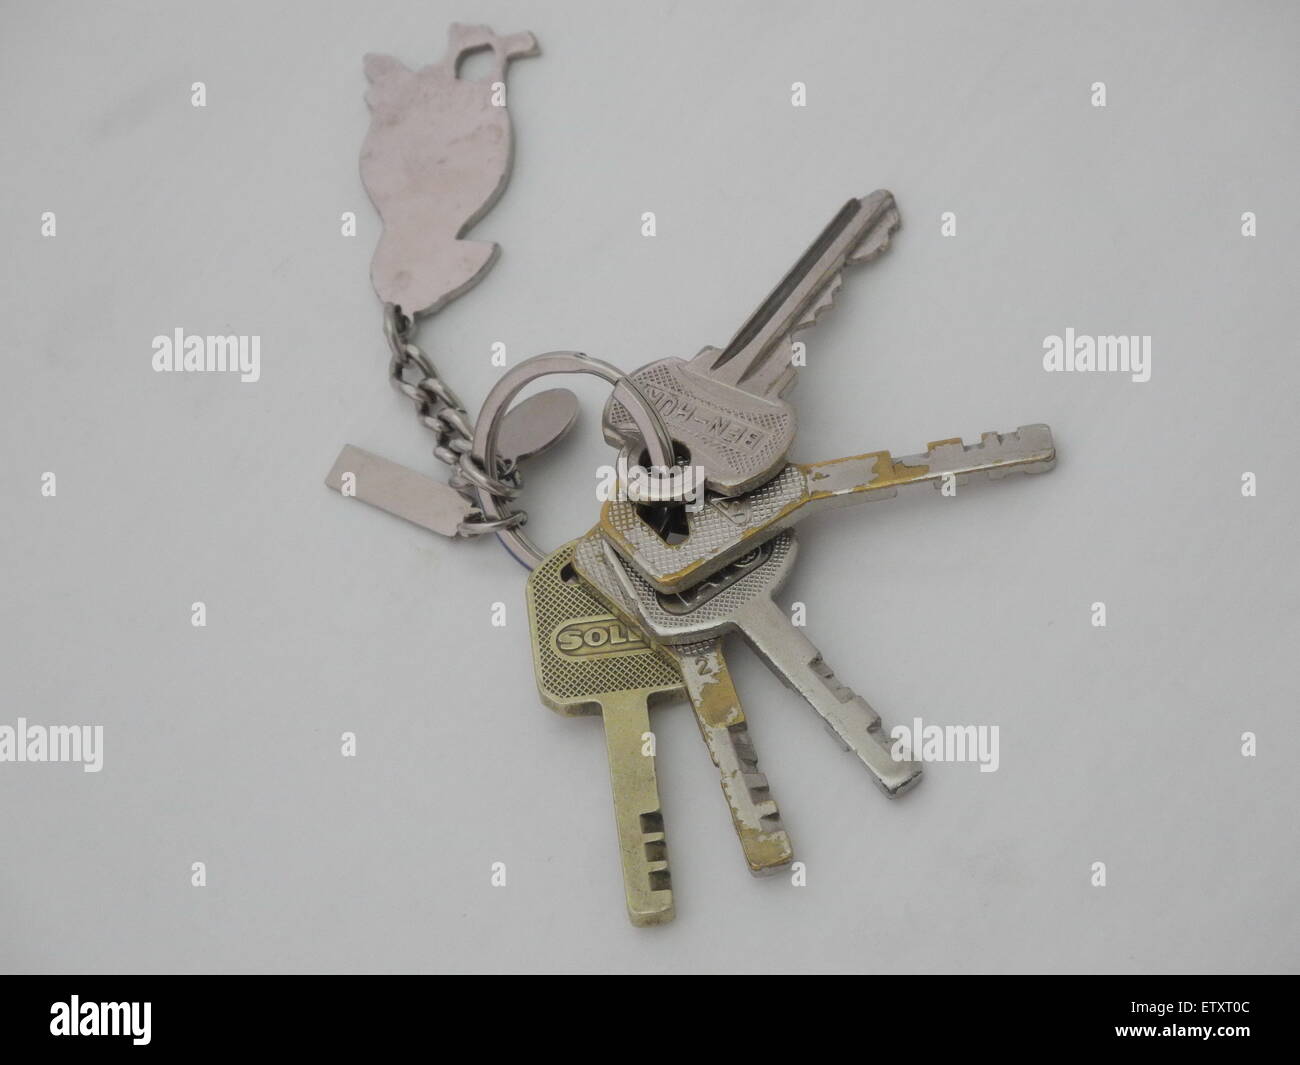 bunch of keys Stock Photo